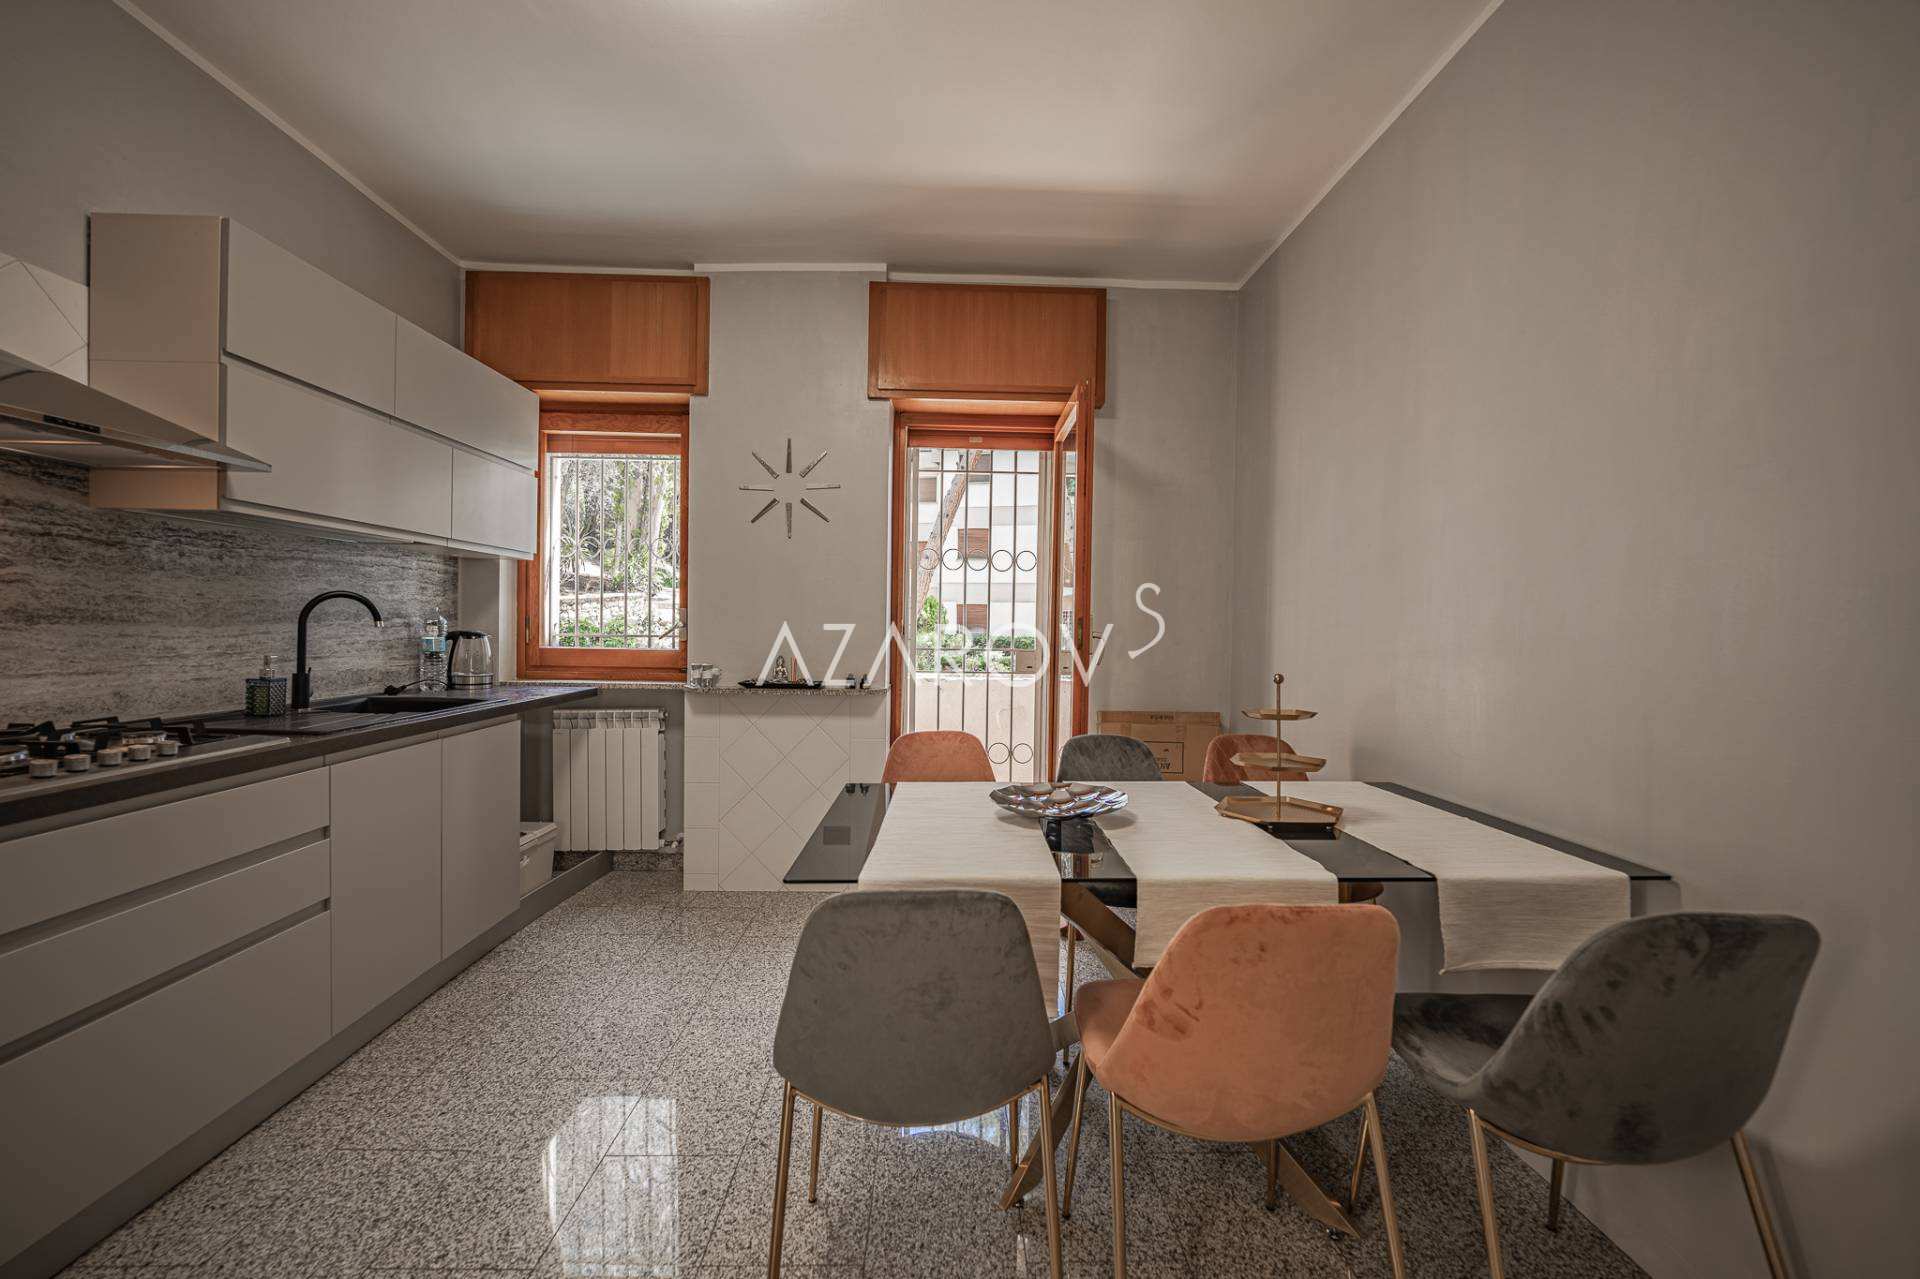 For sale apartment 164 m2 in Sanremo